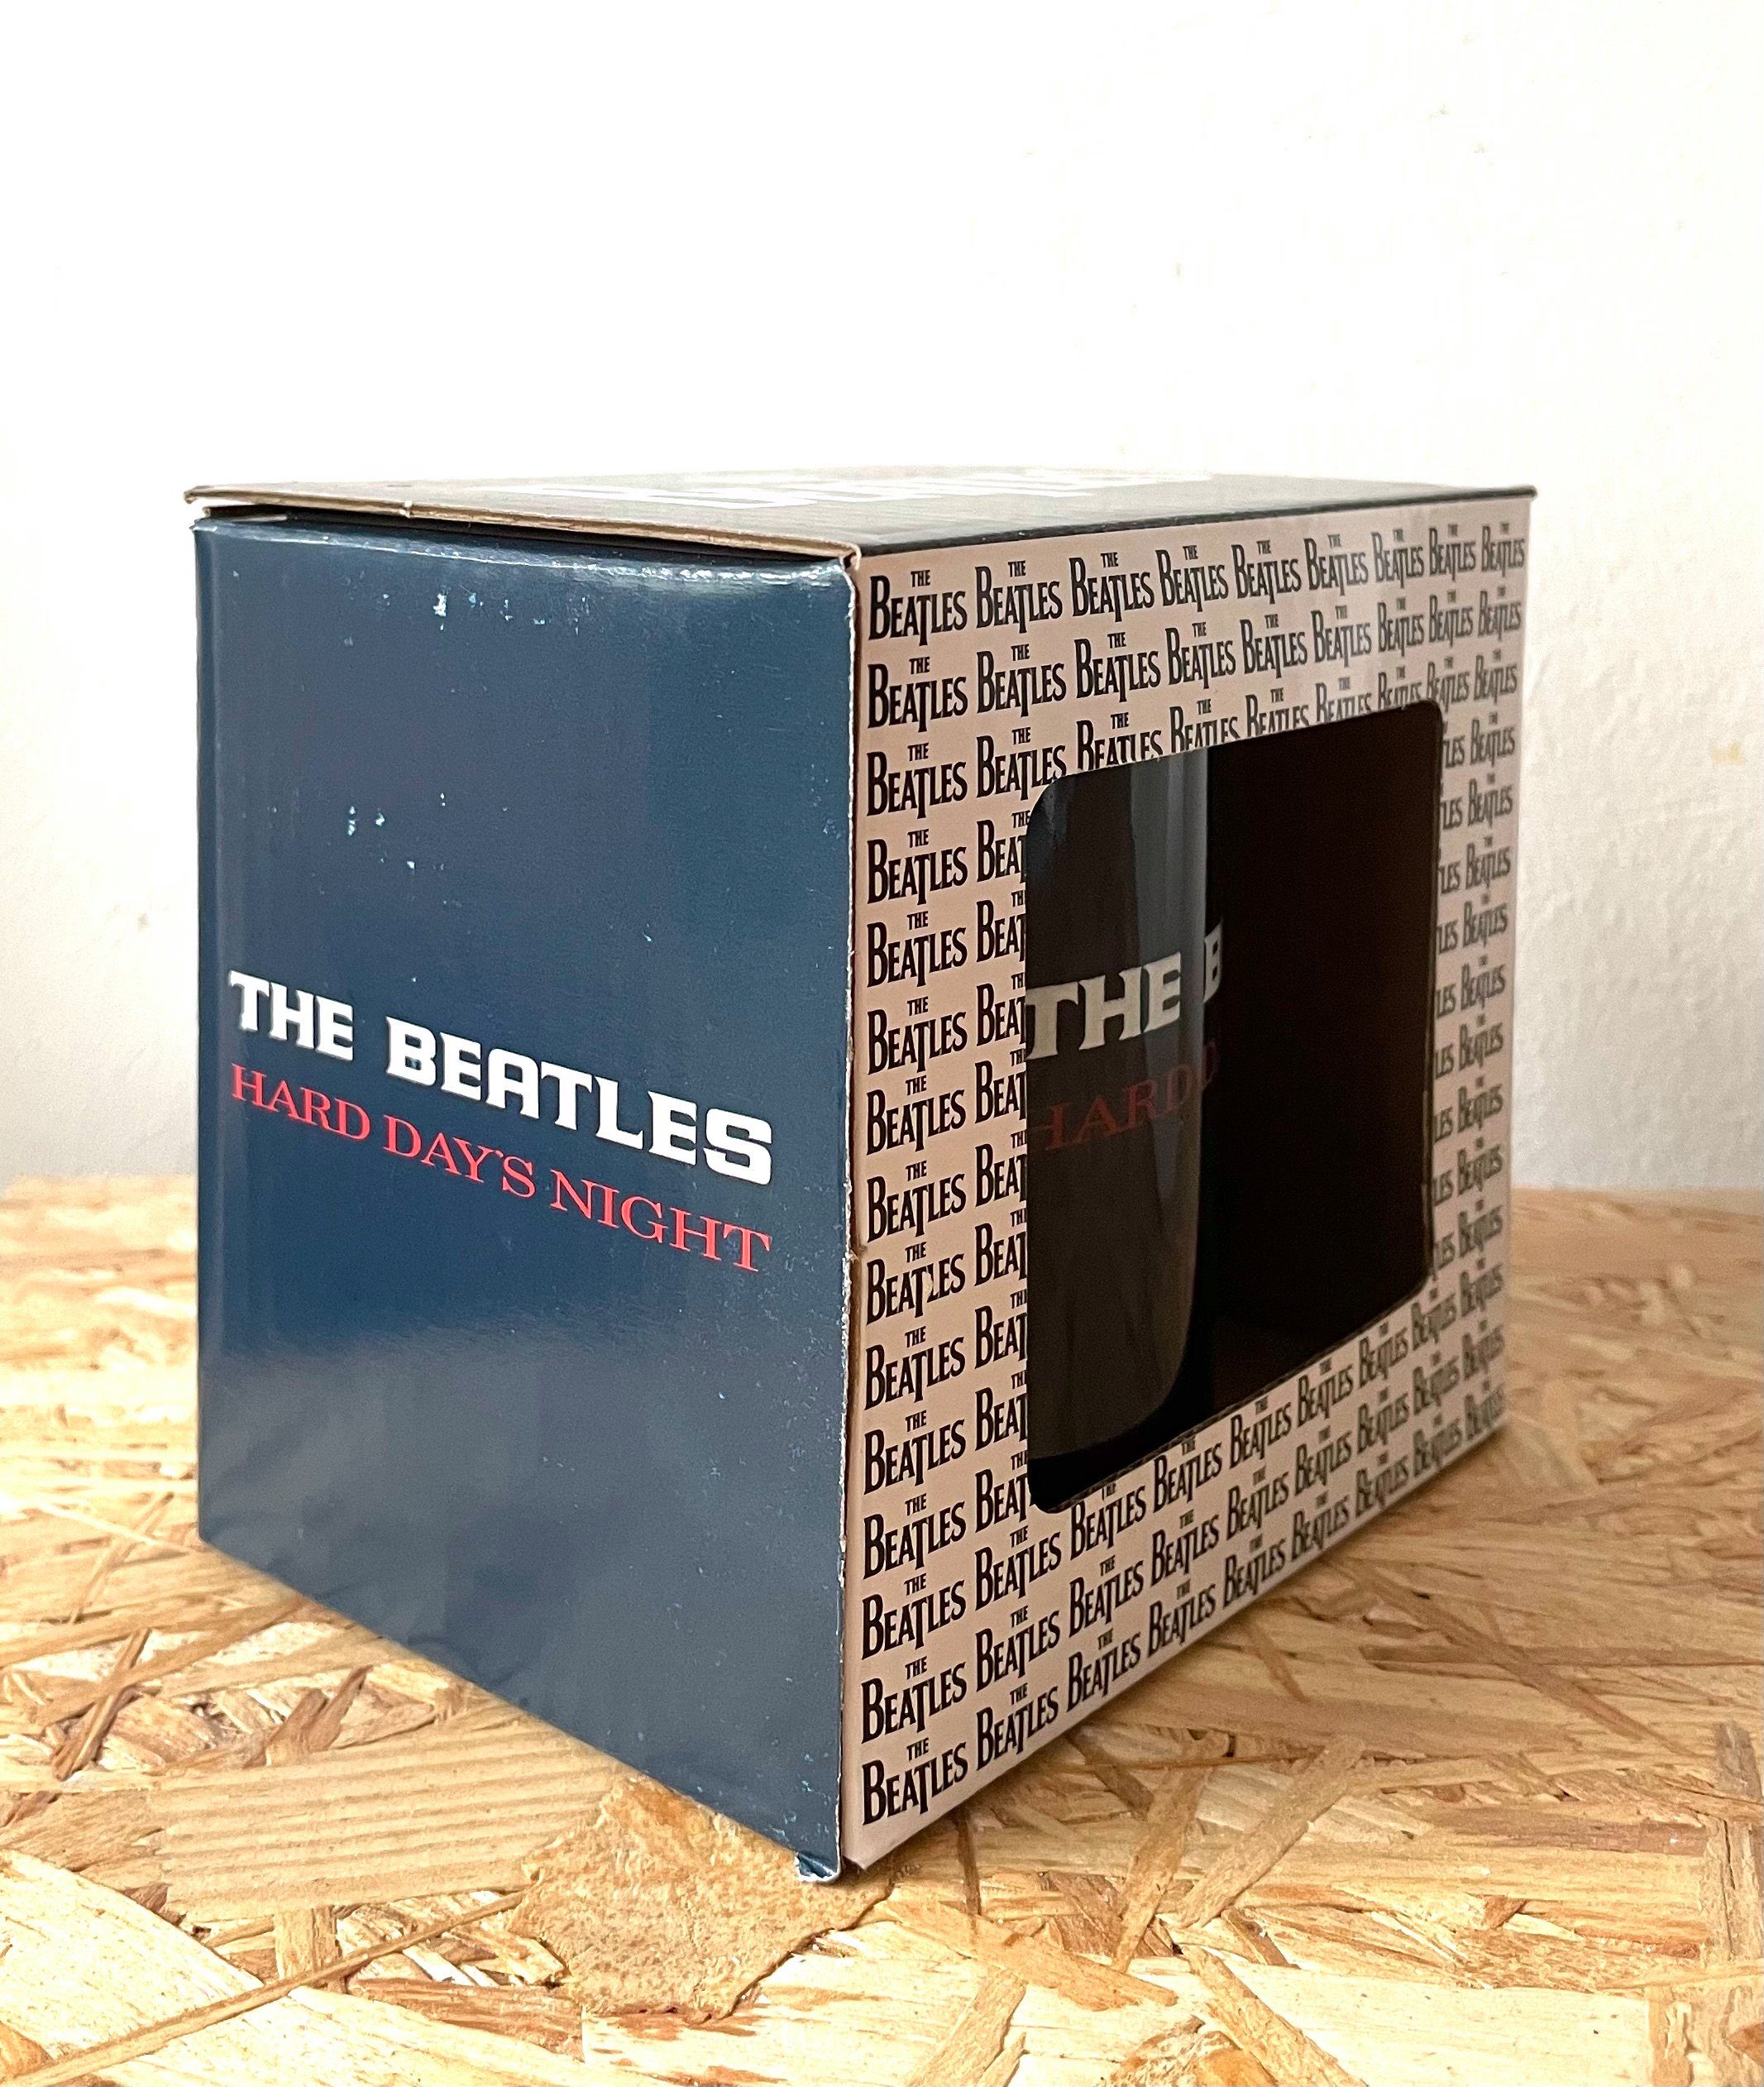 Tasse, The Beatles Keramik, 300 ml